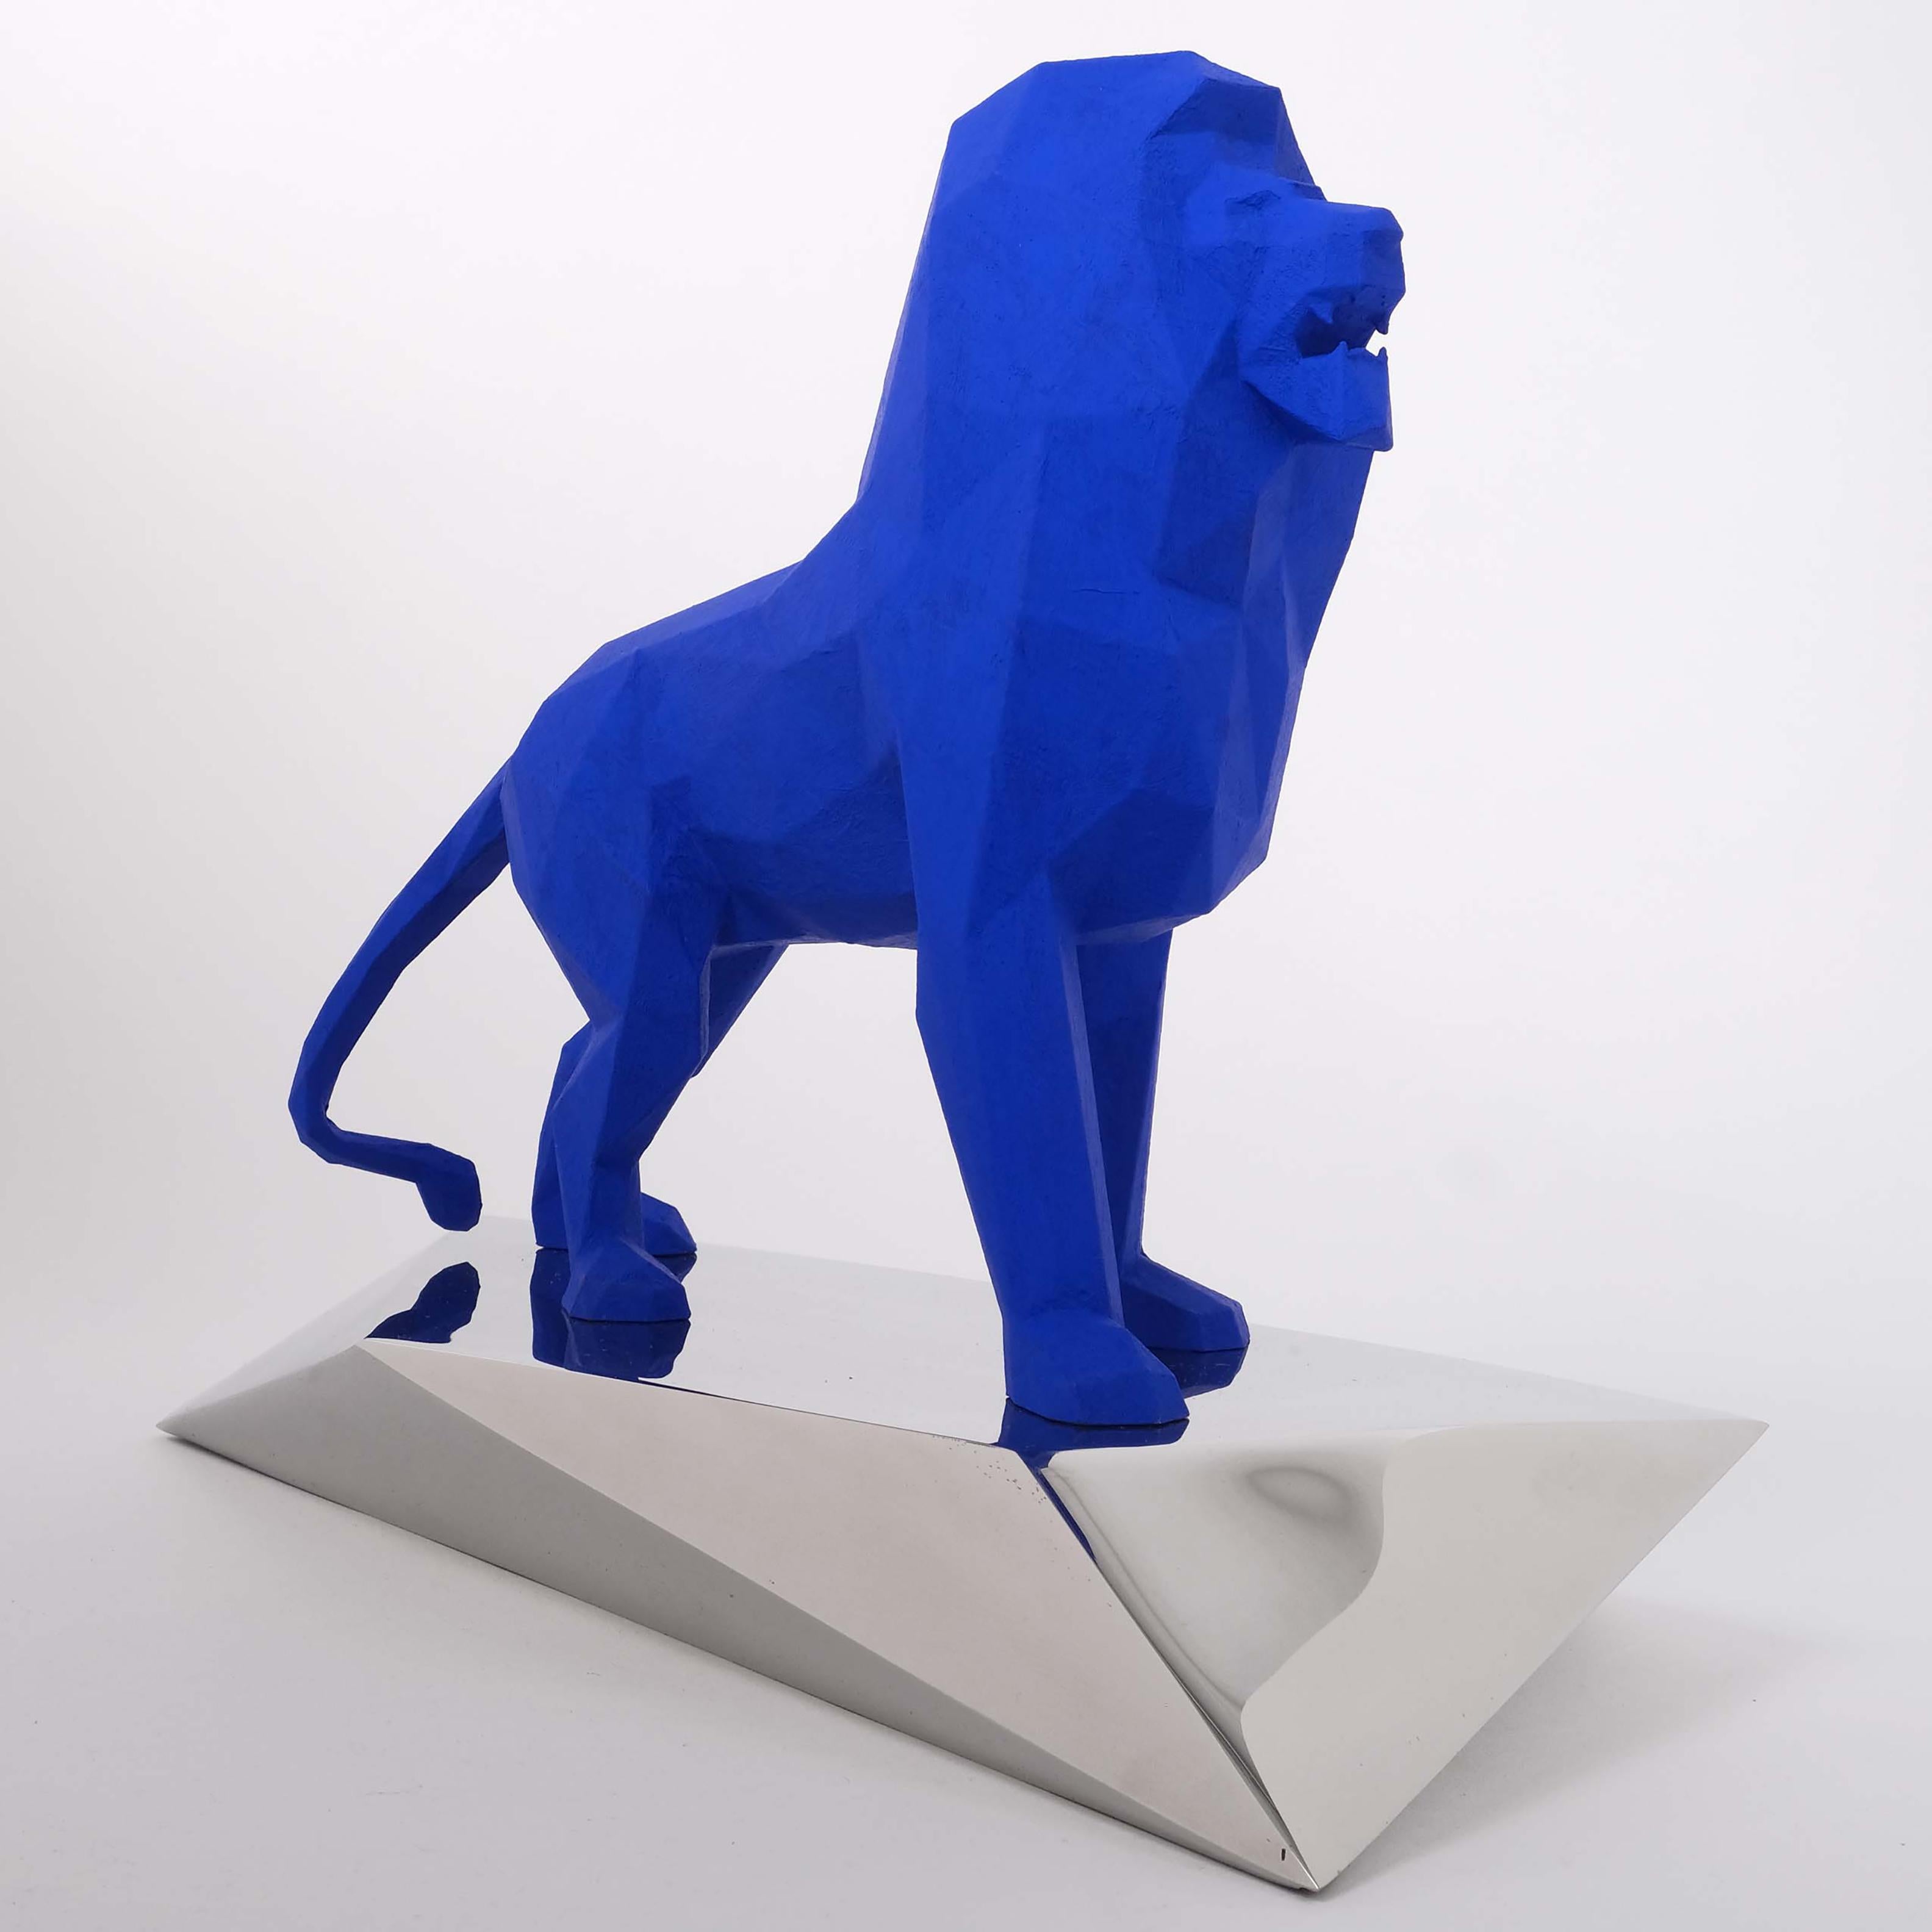 Hic Sunt Leones Blue - Sculpture by Daniele Basso